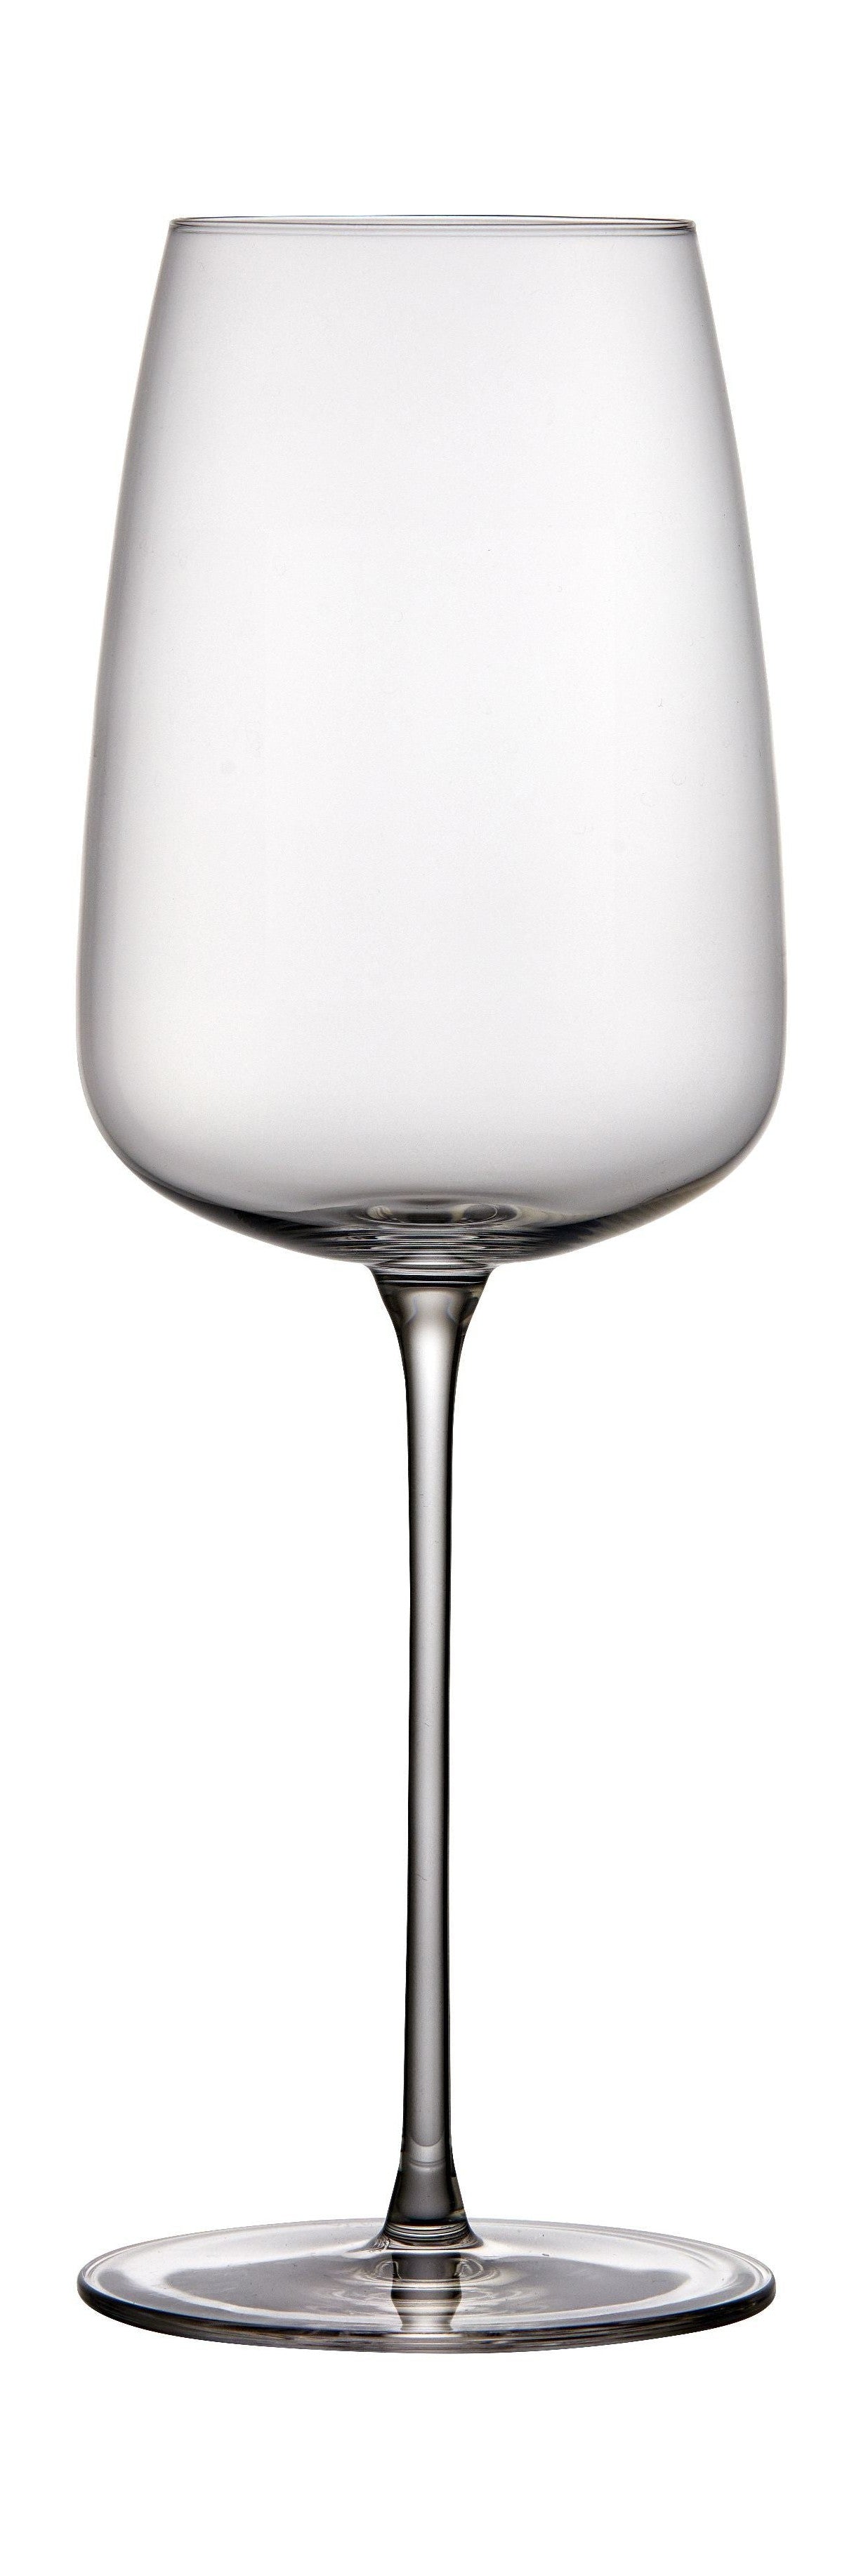 lyngby glas veneto红酒玻璃54 cl 2 pcs